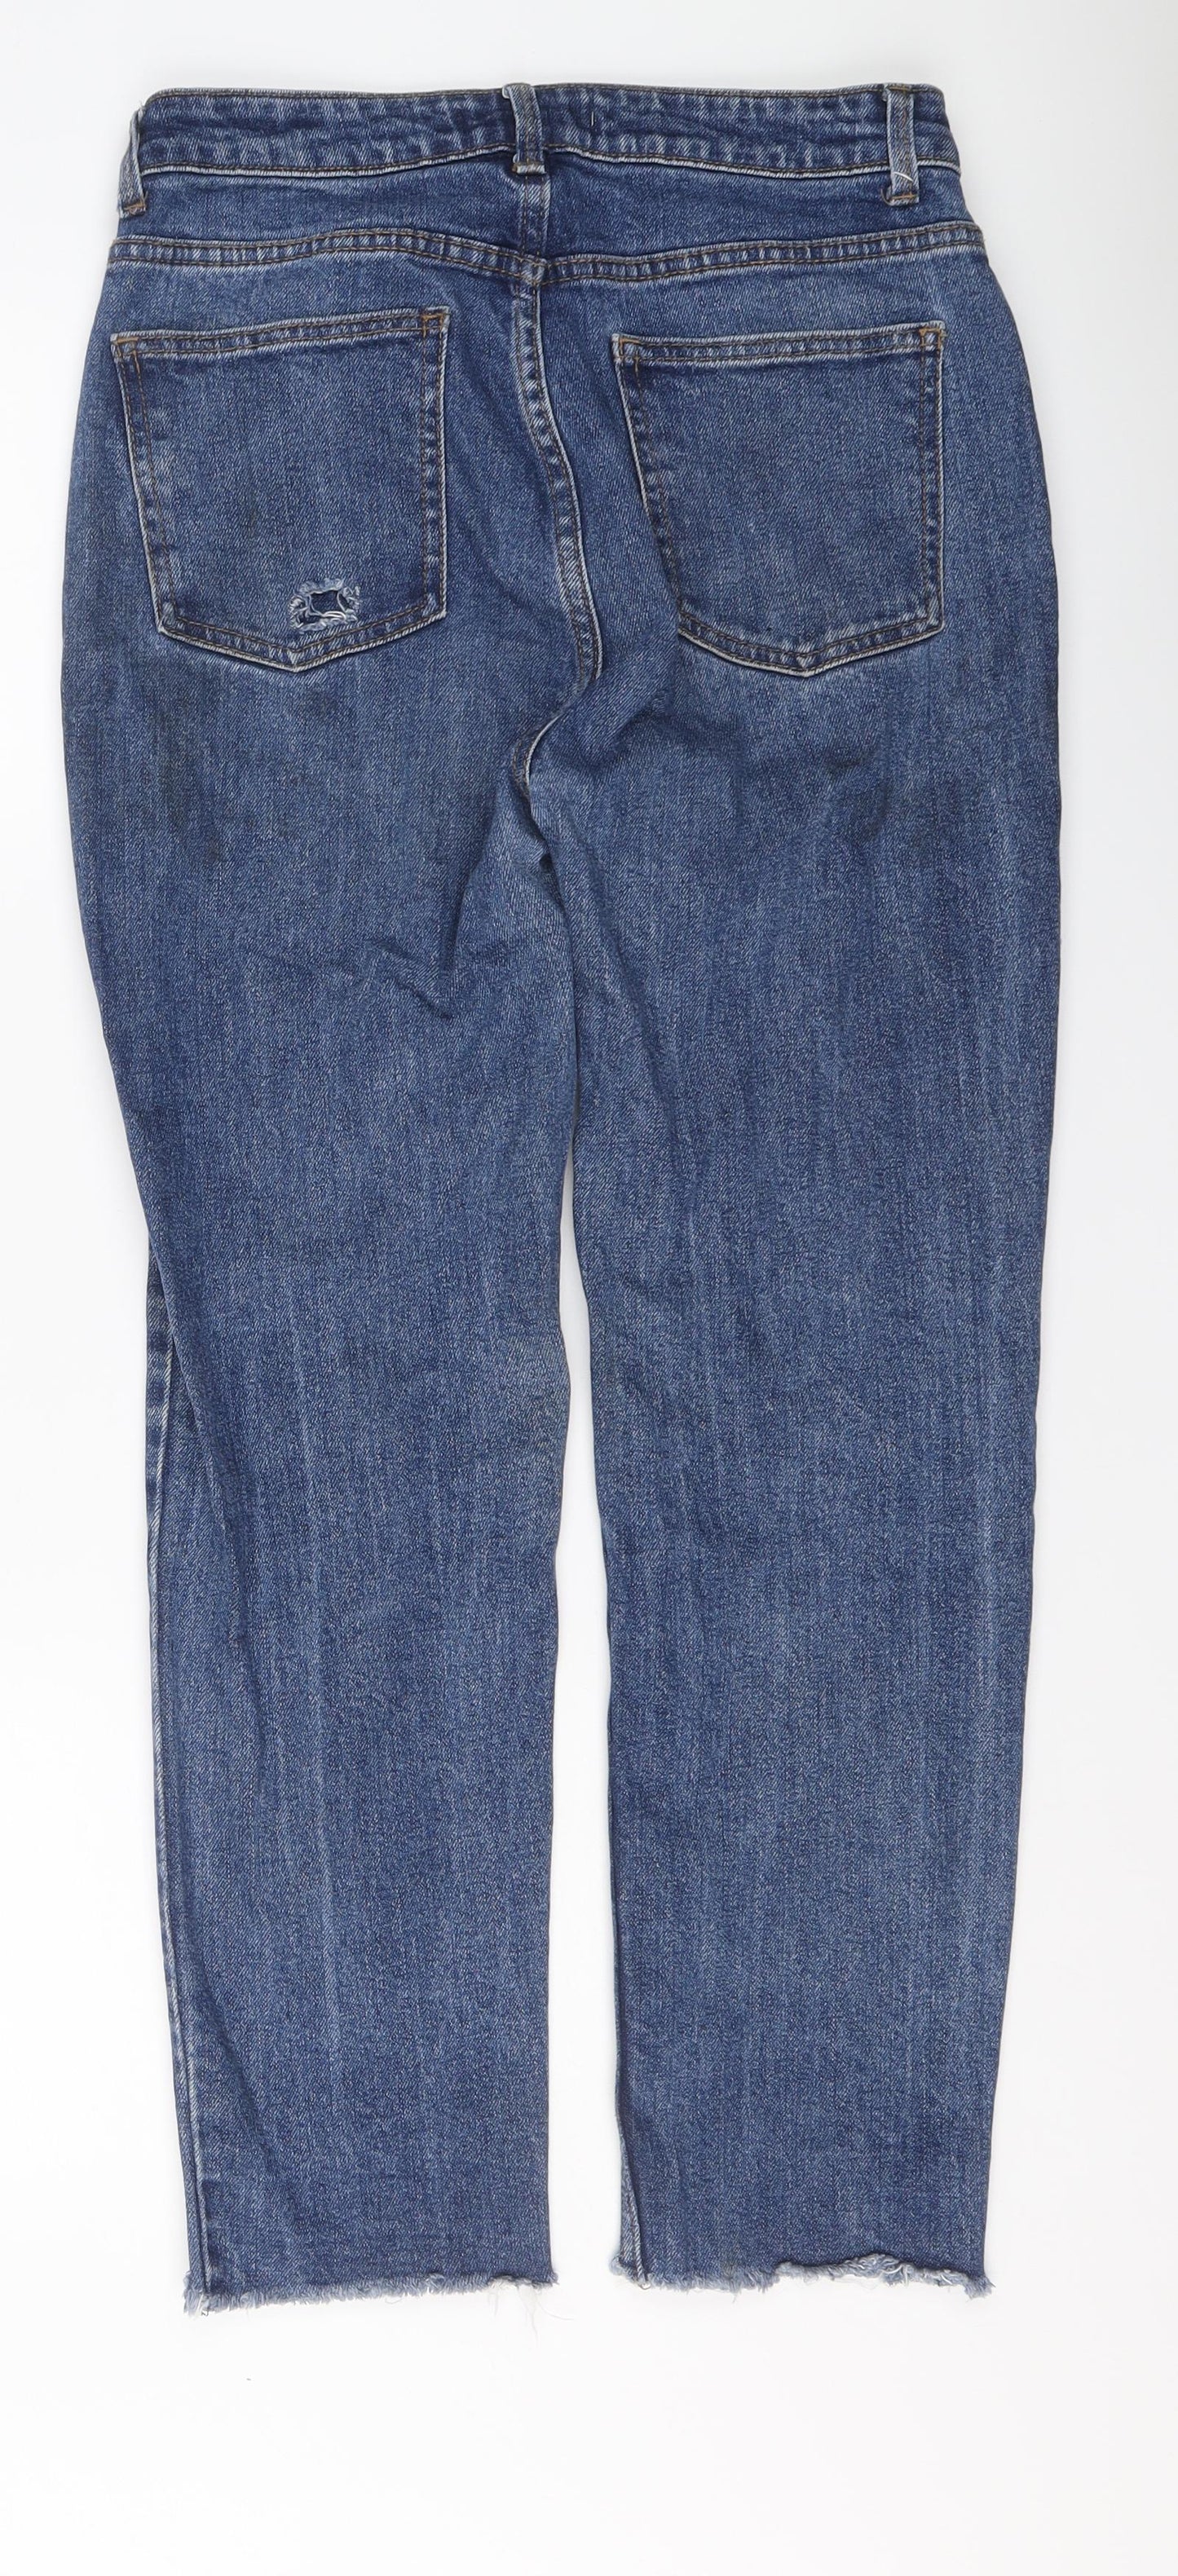 Denim & Co. Womens Blue Cotton Skinny Jeans Size 12 L25 in Regular Button